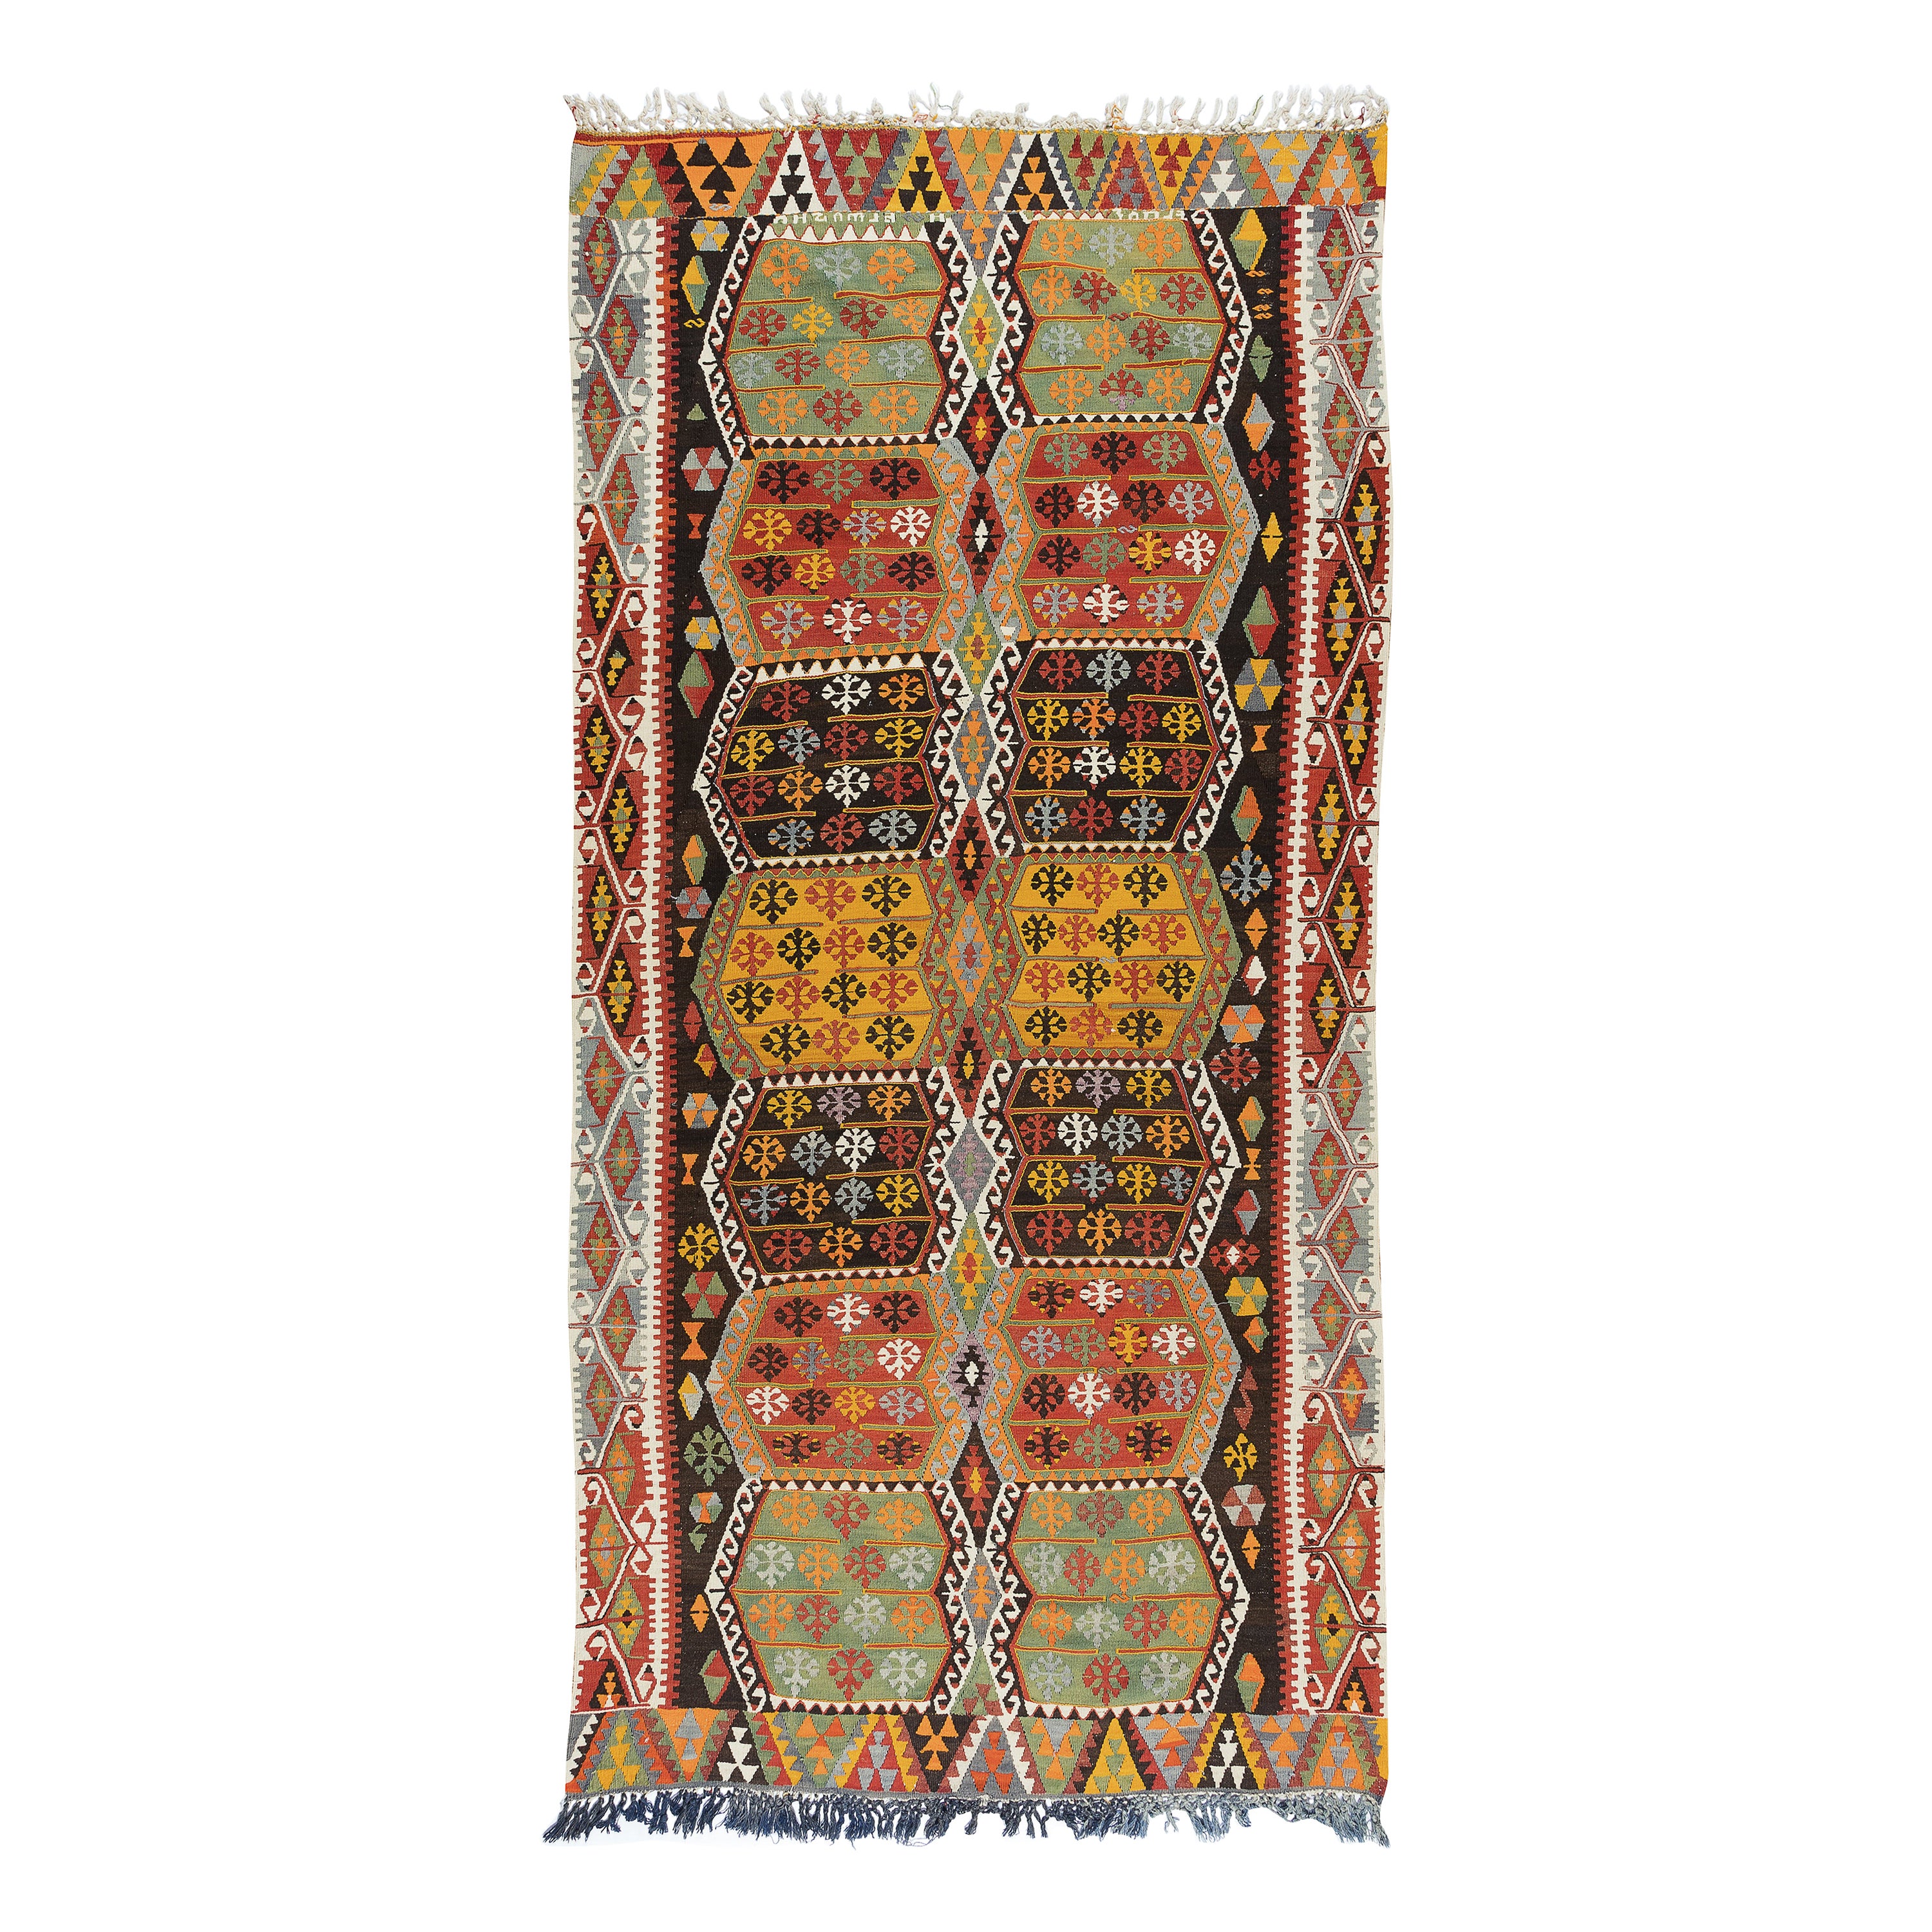 6x11.6 Ft Vintage Handmade Turkish Wool Kilim Runner, Flat-Weave Colorful Rug